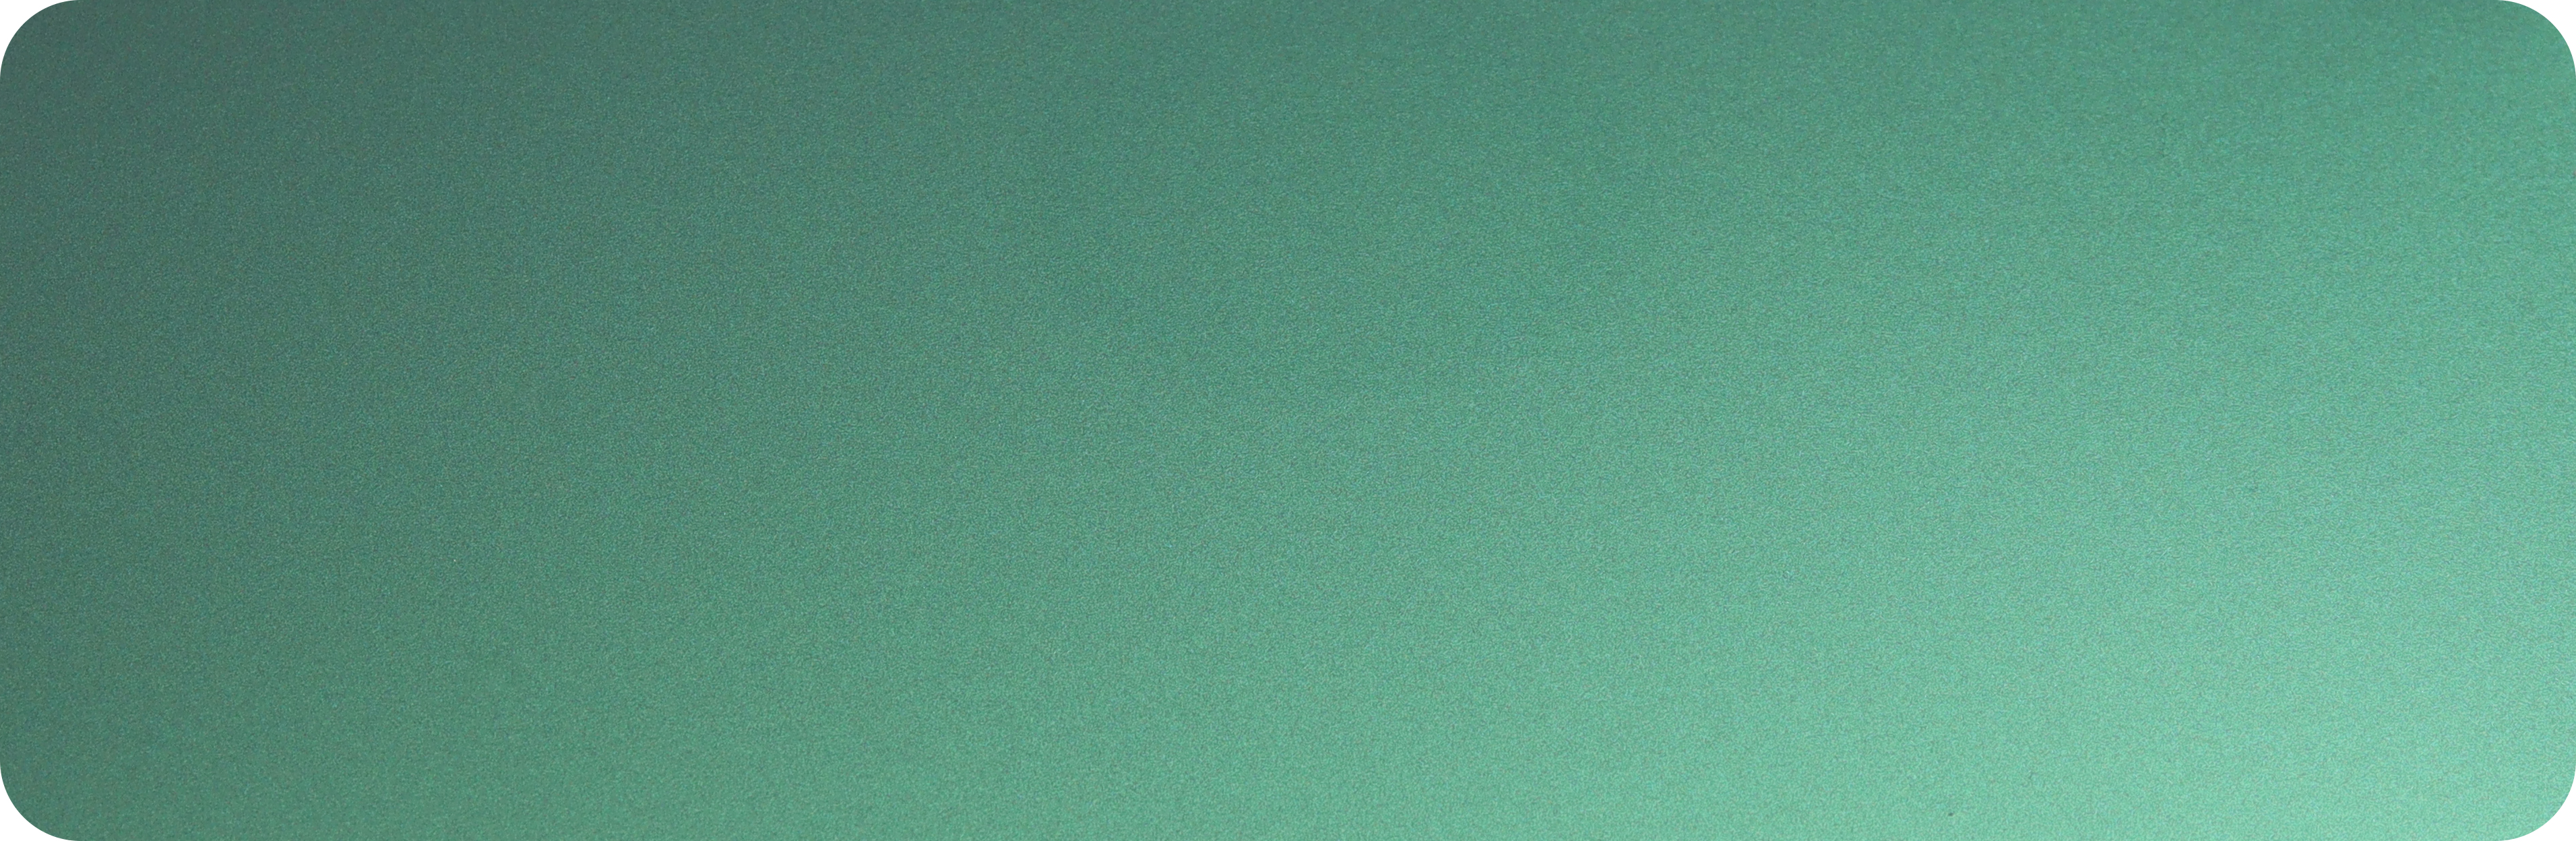 7.TPU-ffantasy turquoise